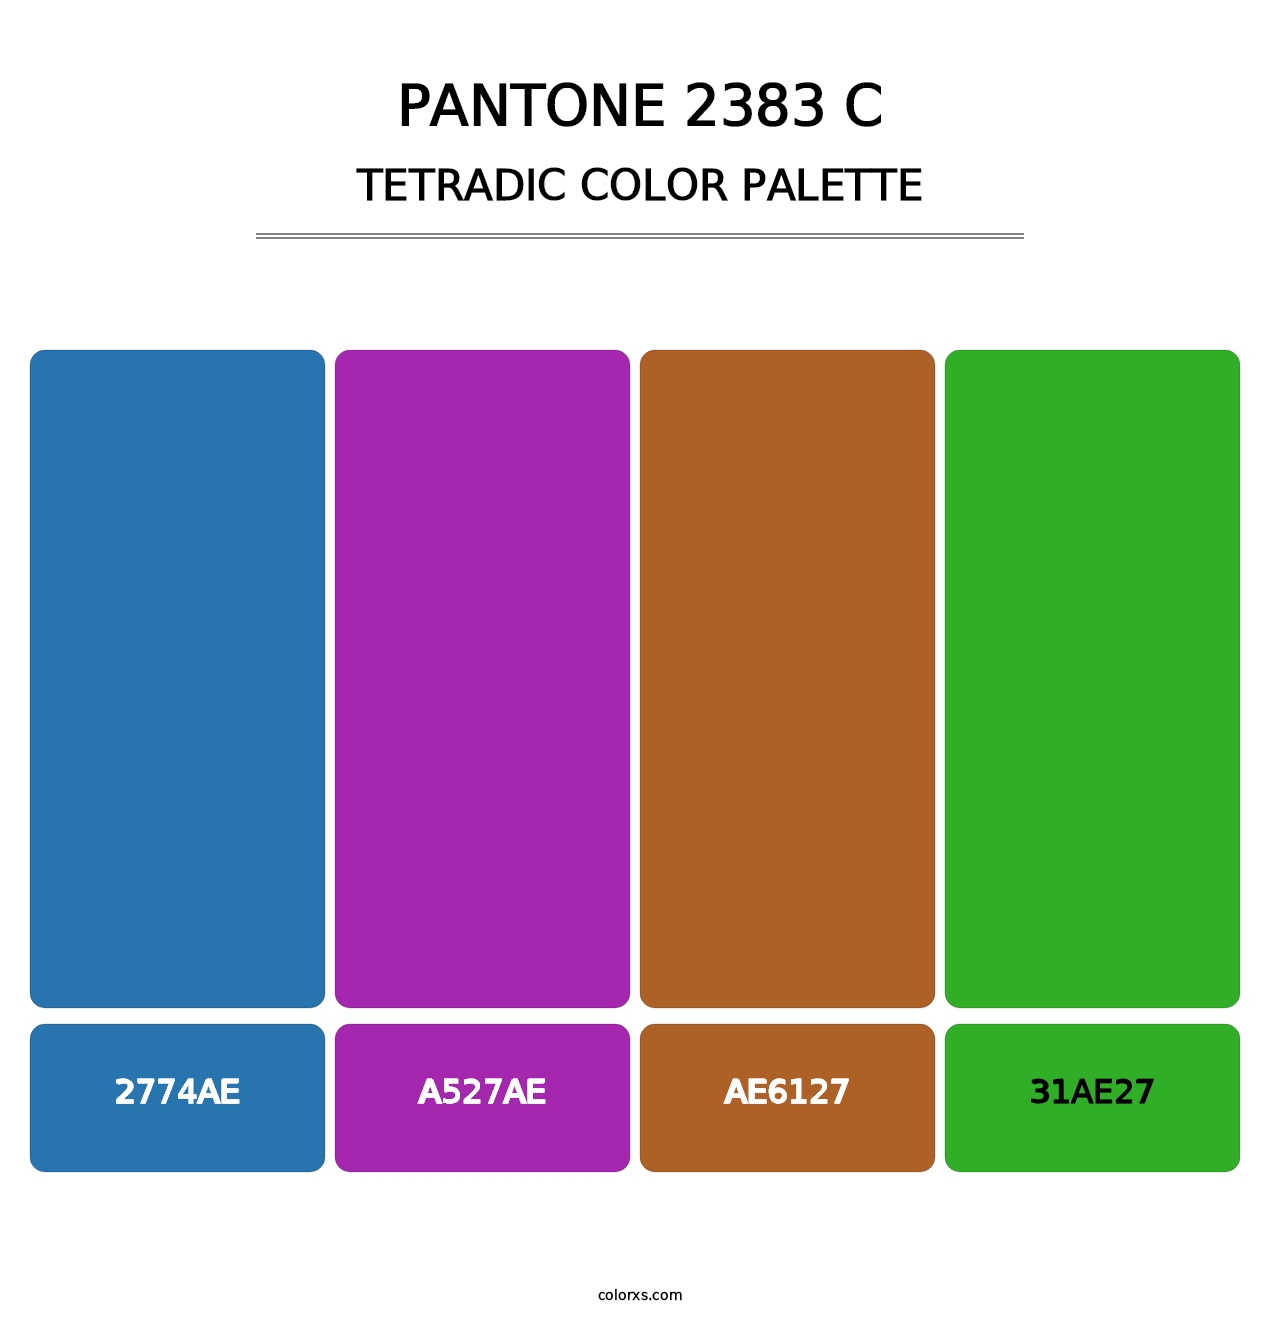 PANTONE 2383 C - Tetradic Color Palette